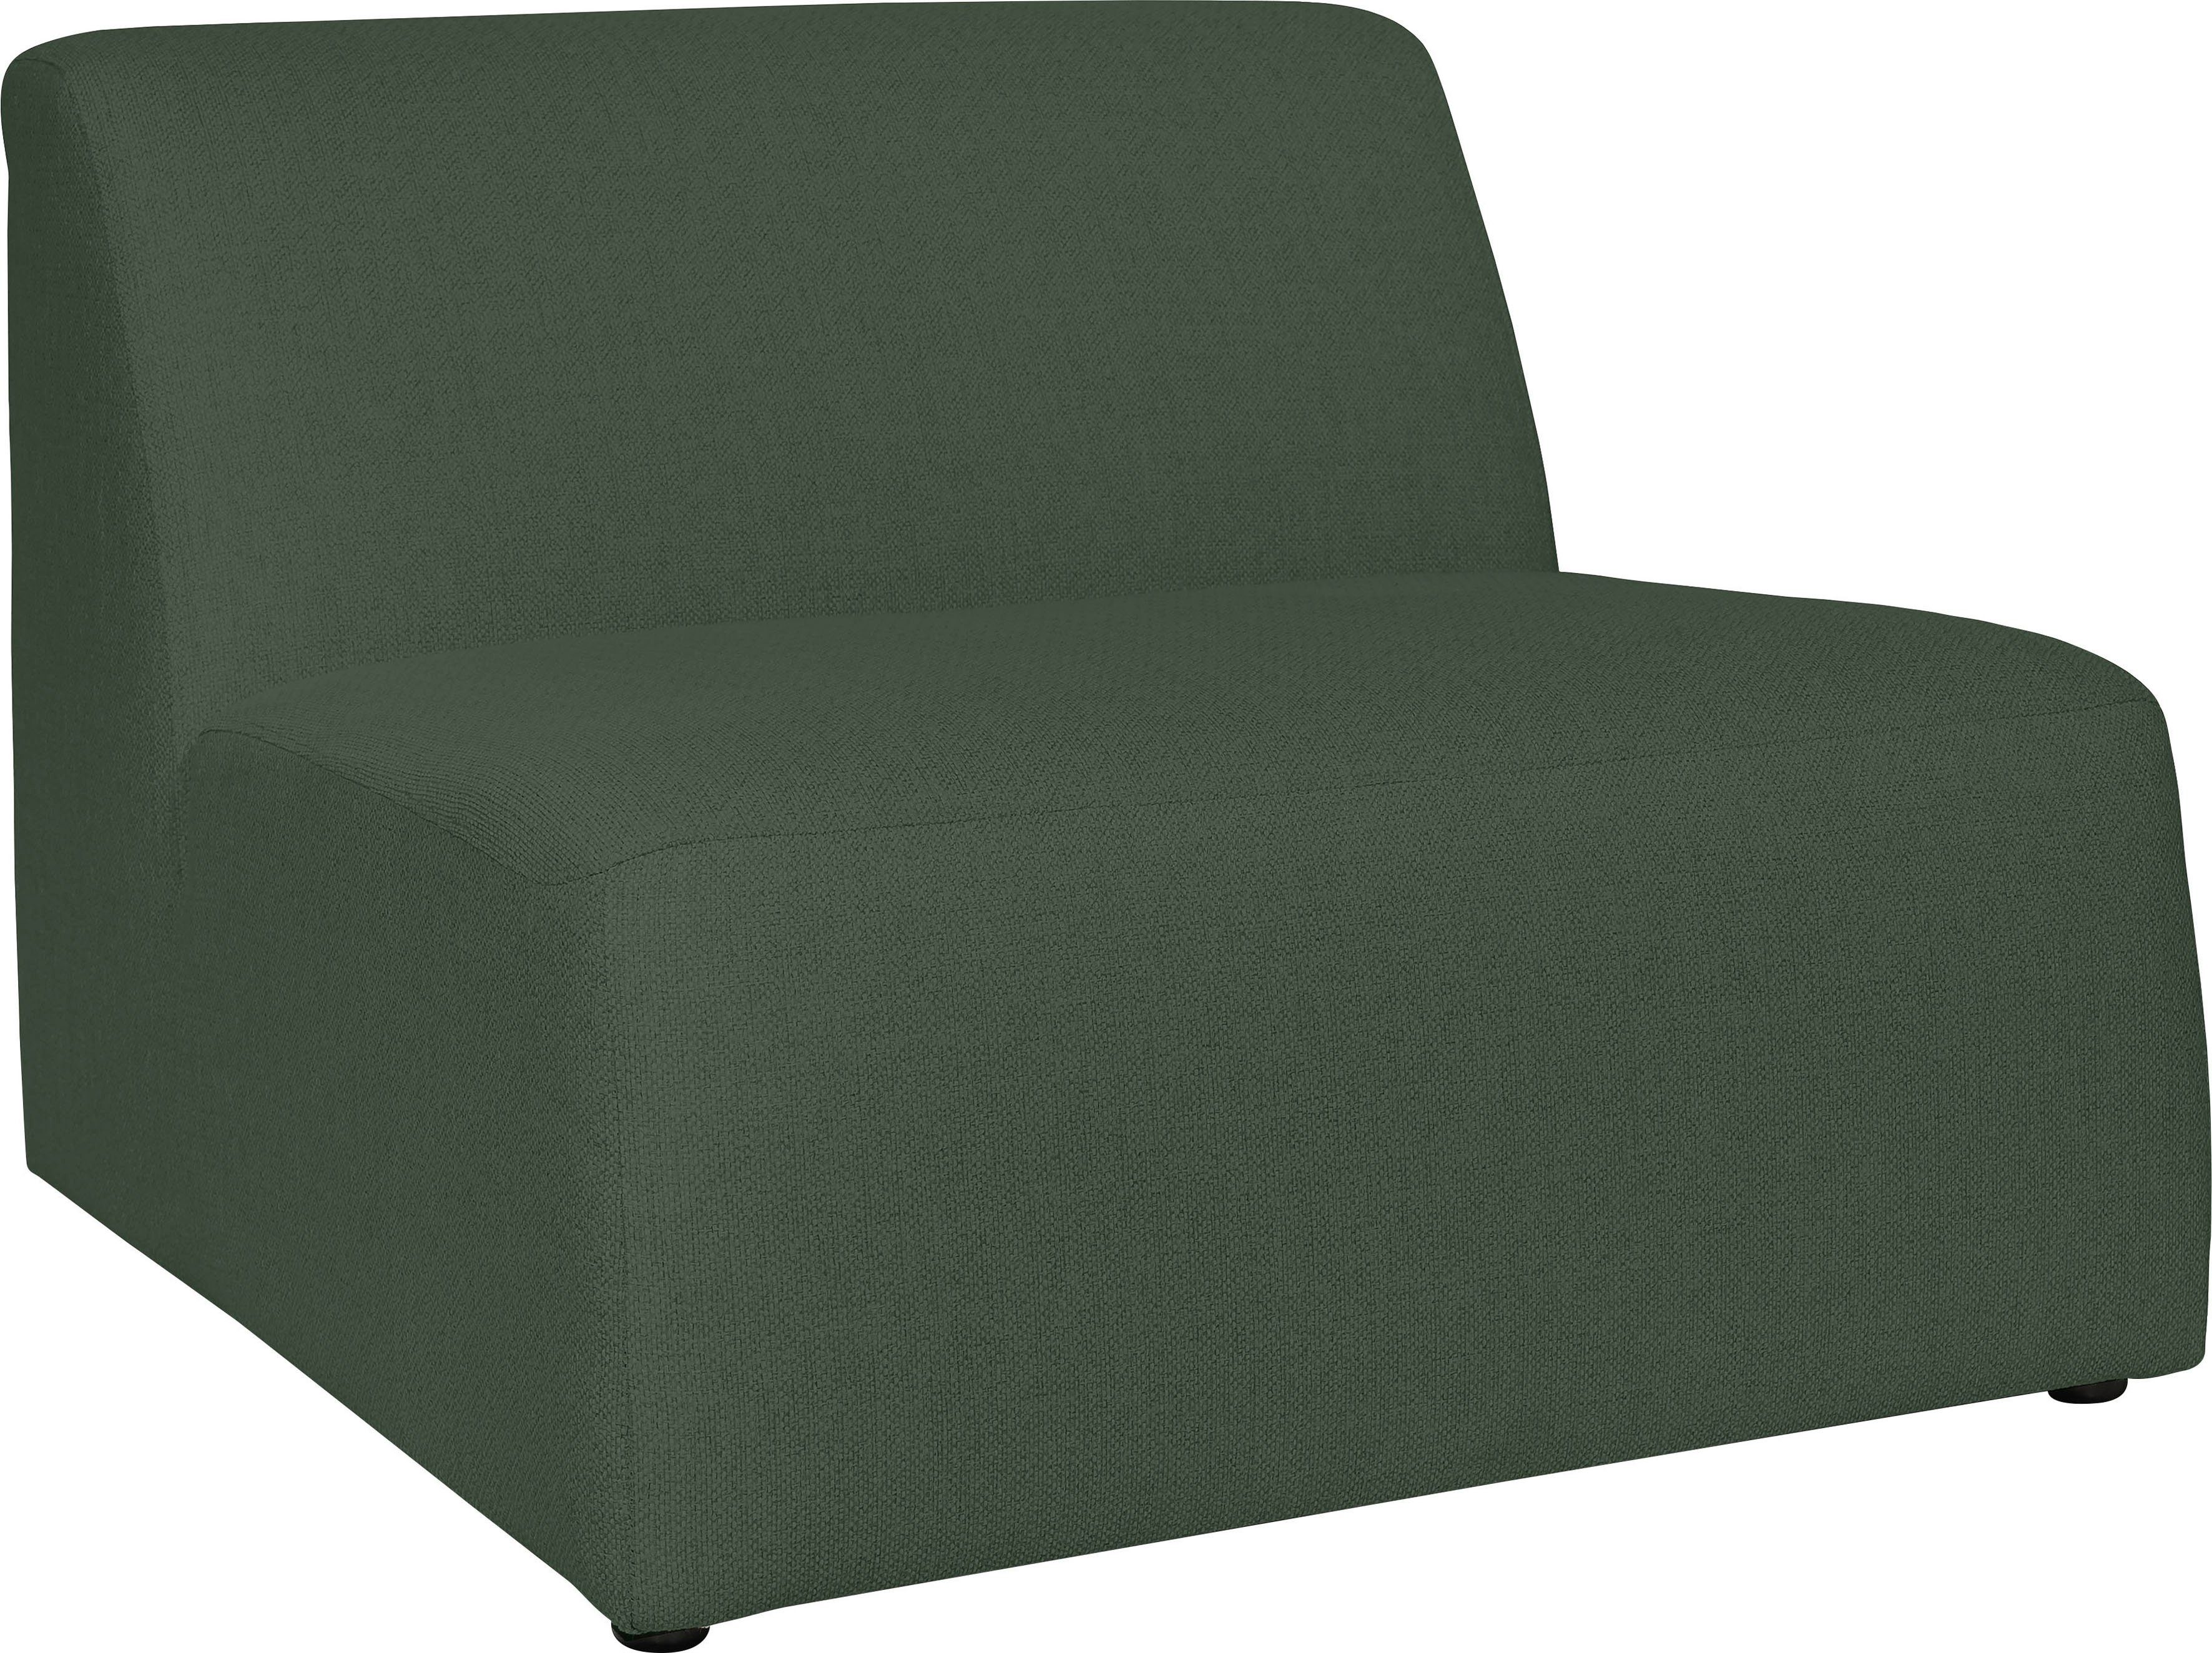 Sofa-Mittelelement schöne INOSIGN Komfort, Koa, khaki Proportionen angenehmer